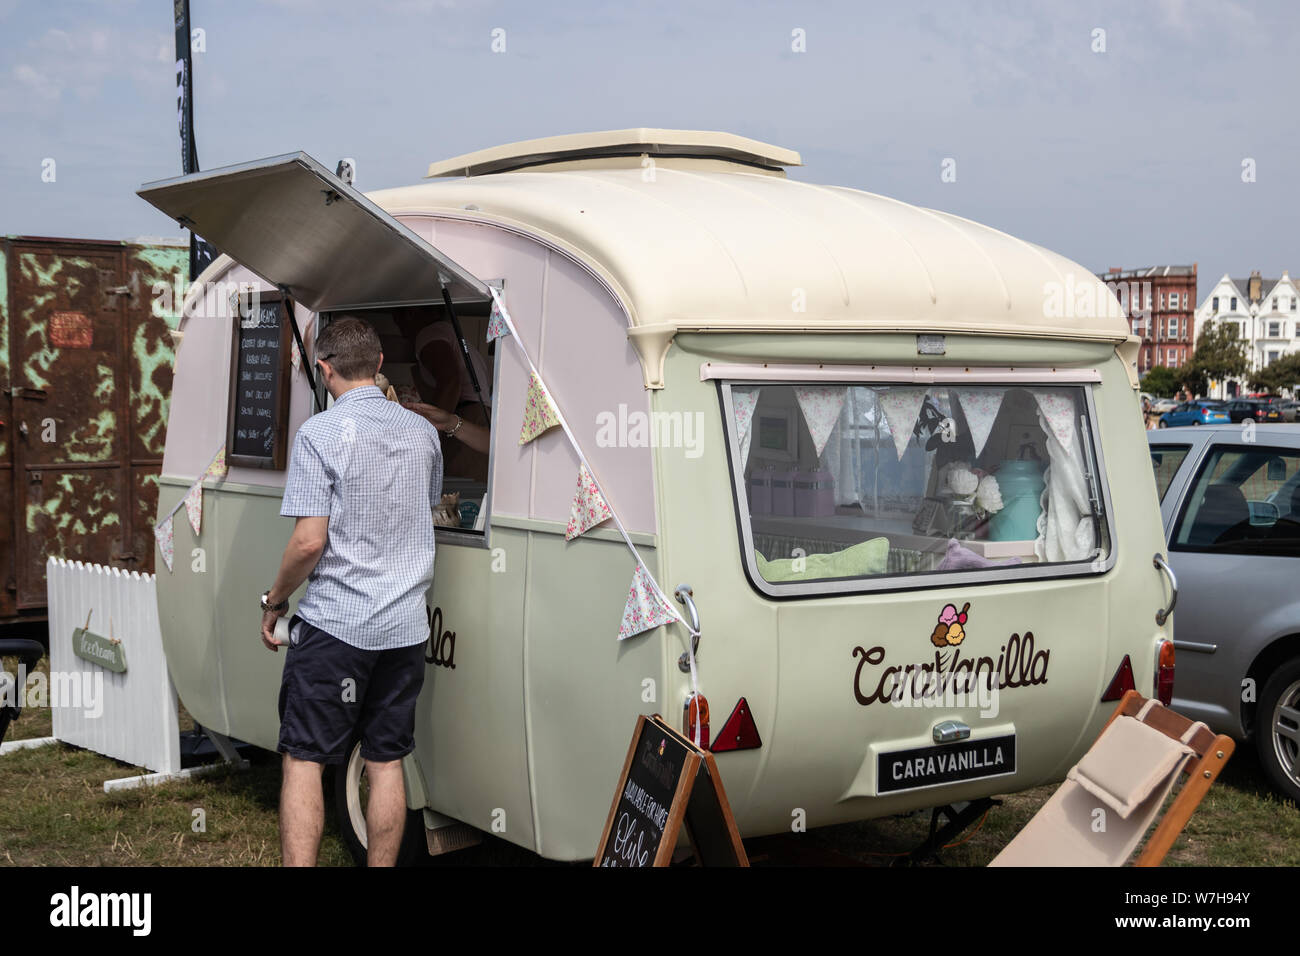 A vintage caravan converted into a mobile cafe Stock Photo